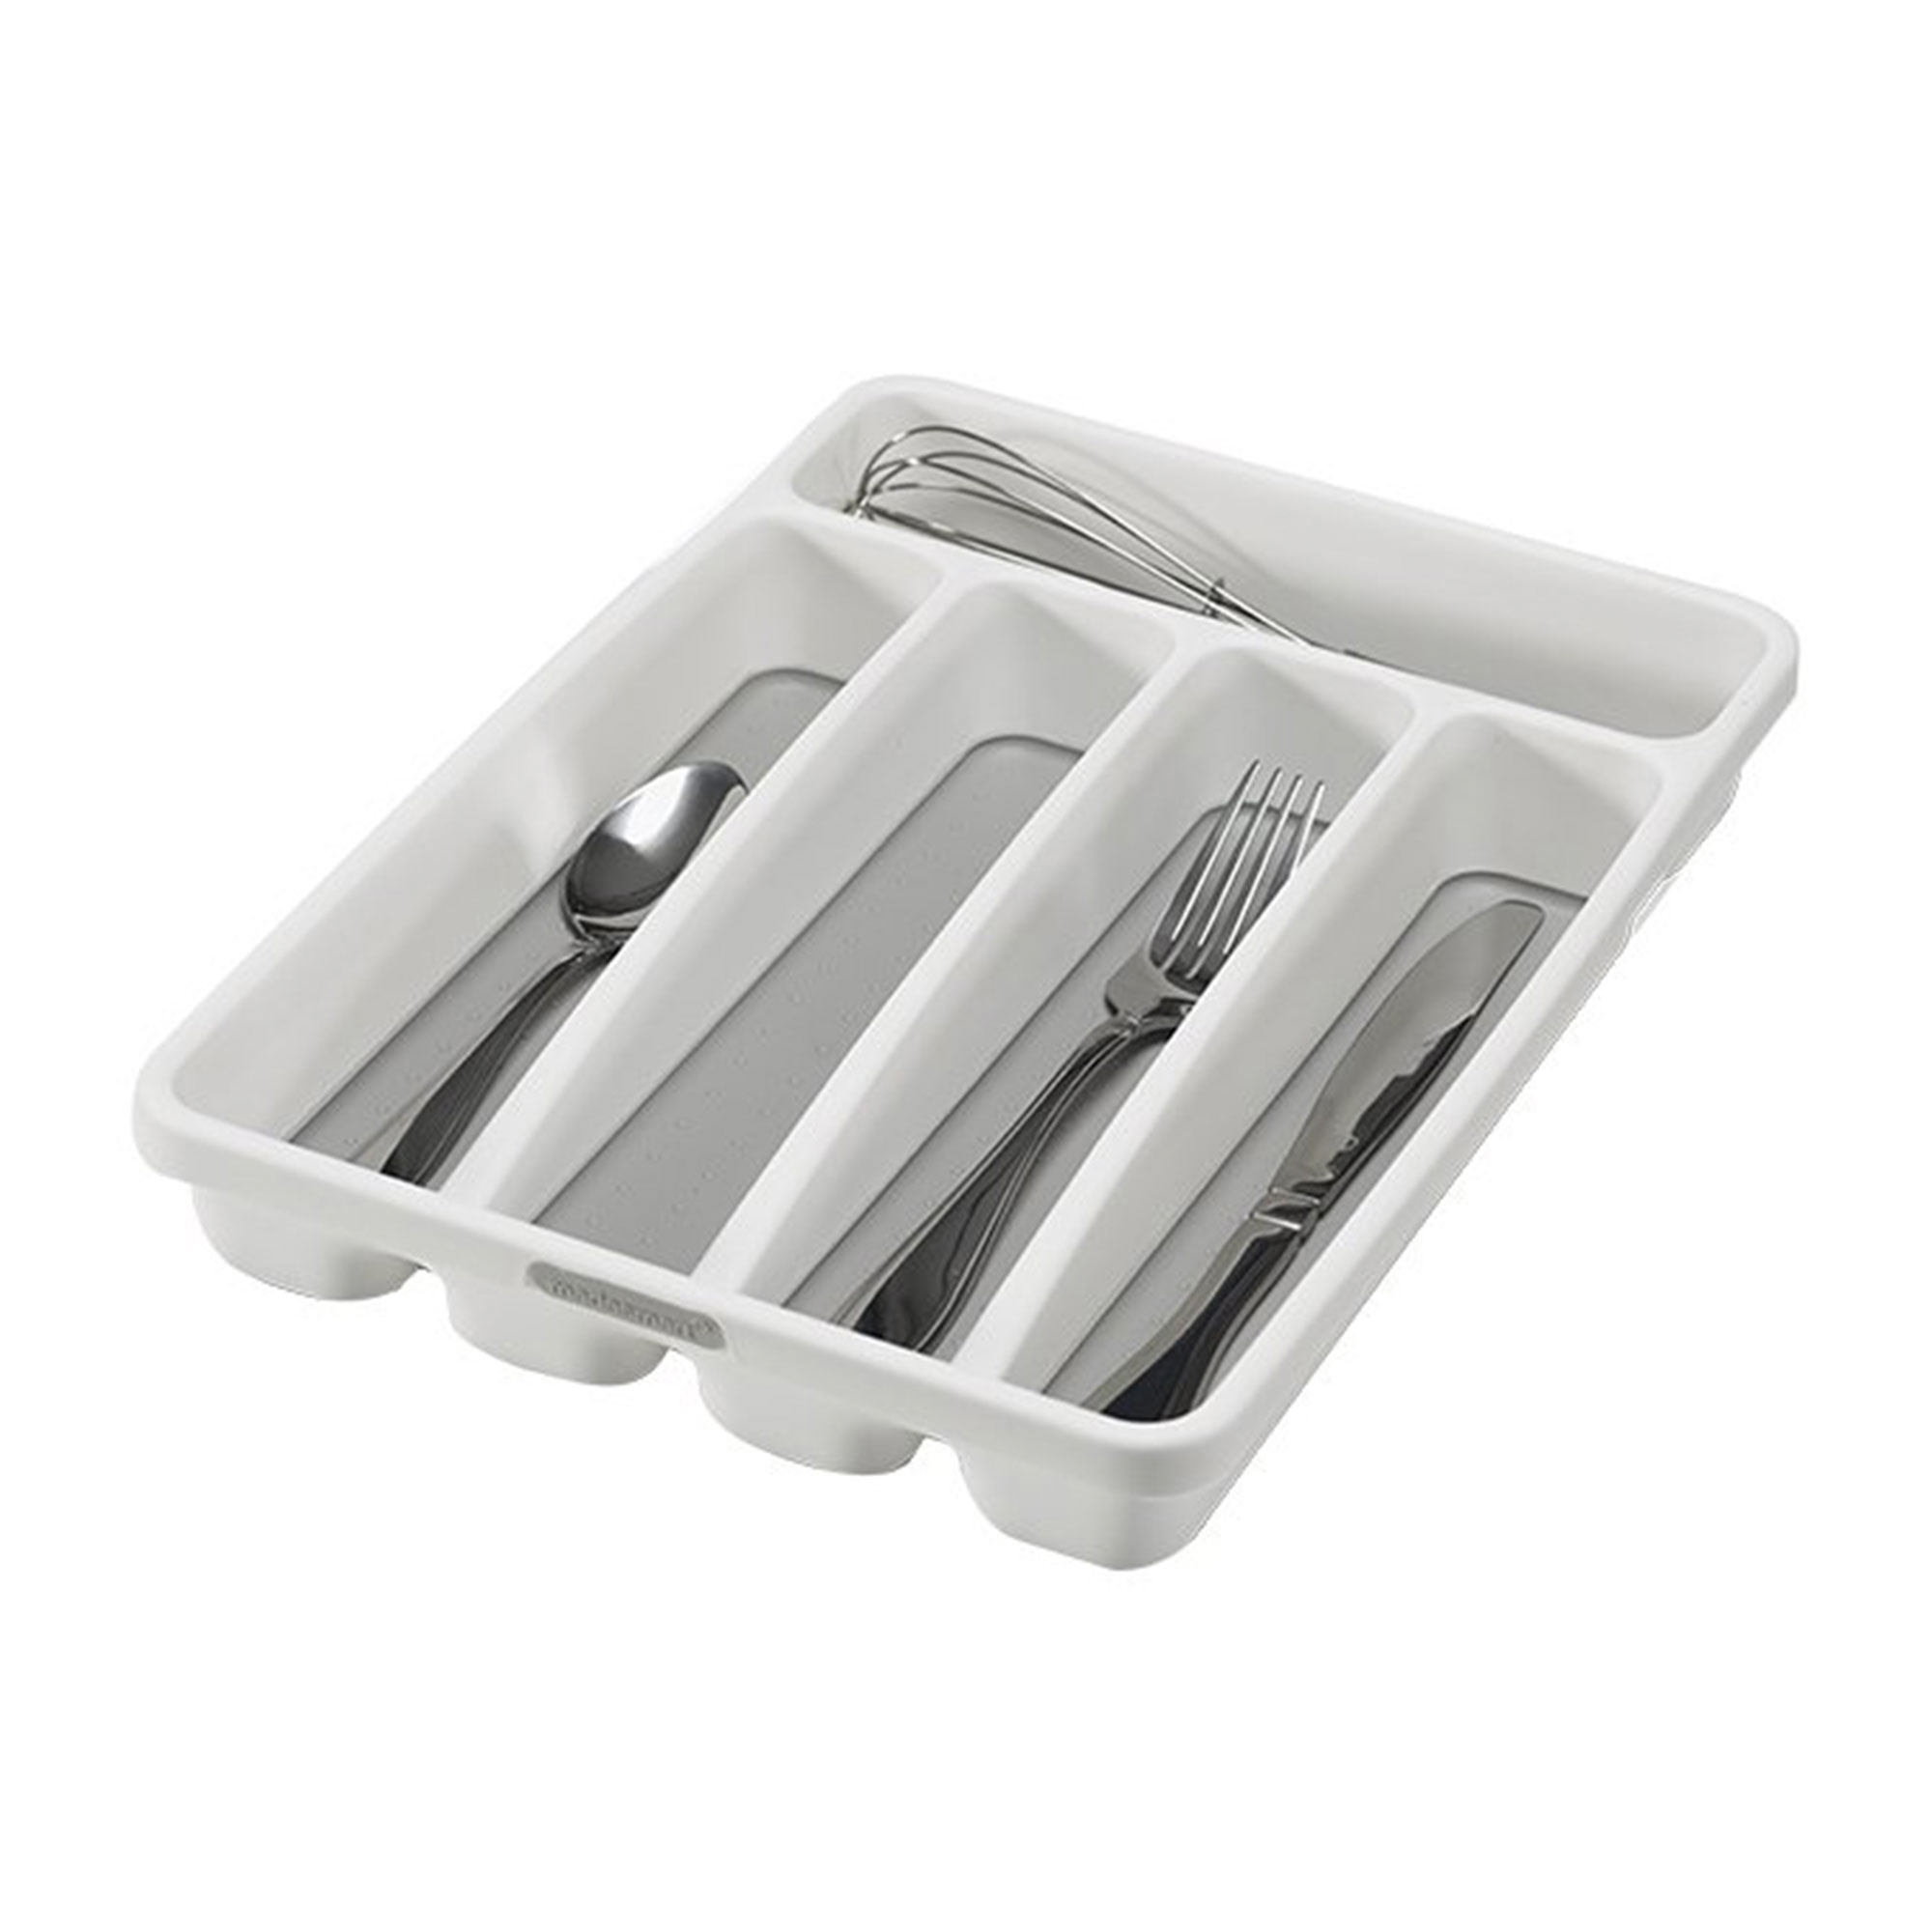 Madesmart Mini Cutlery Tray 5 Compartment Image 1